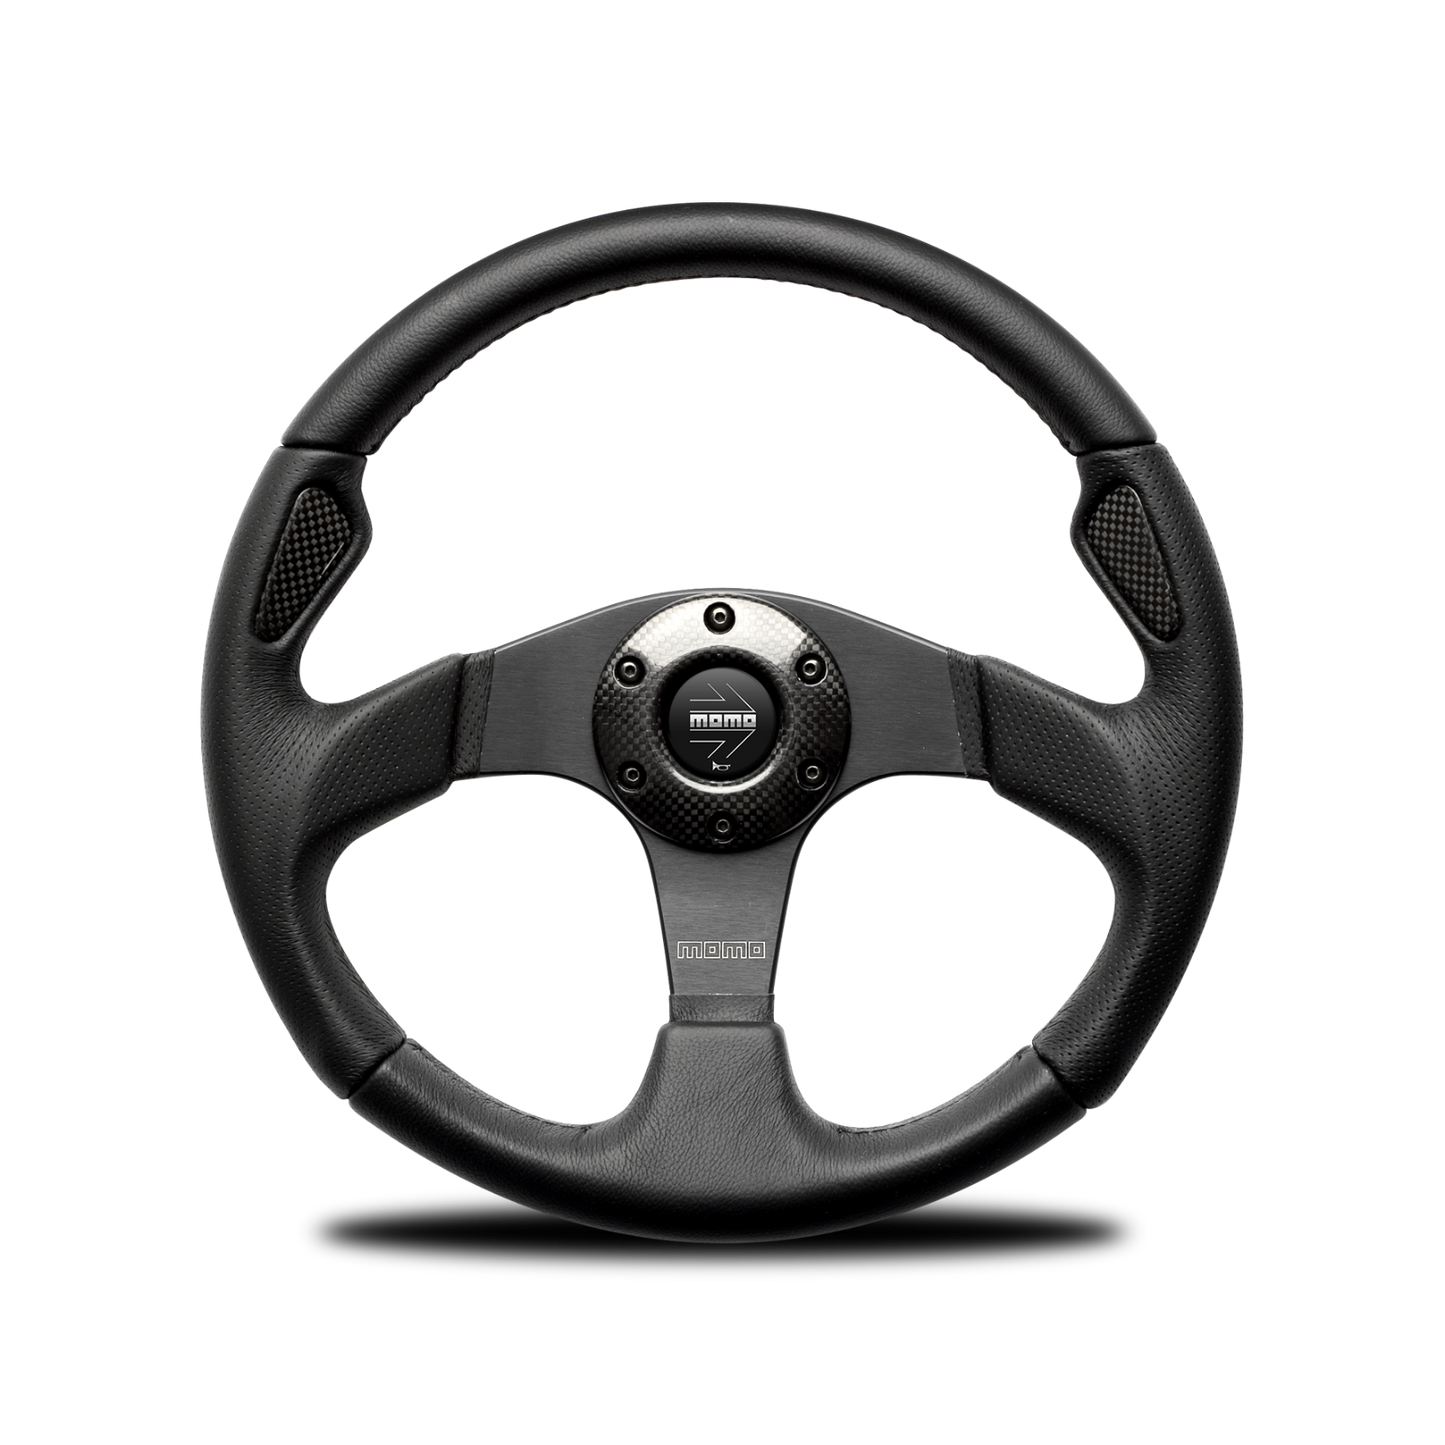 Momo Steering wheel (street) - JET - BLACK LEATHER Ø350mm